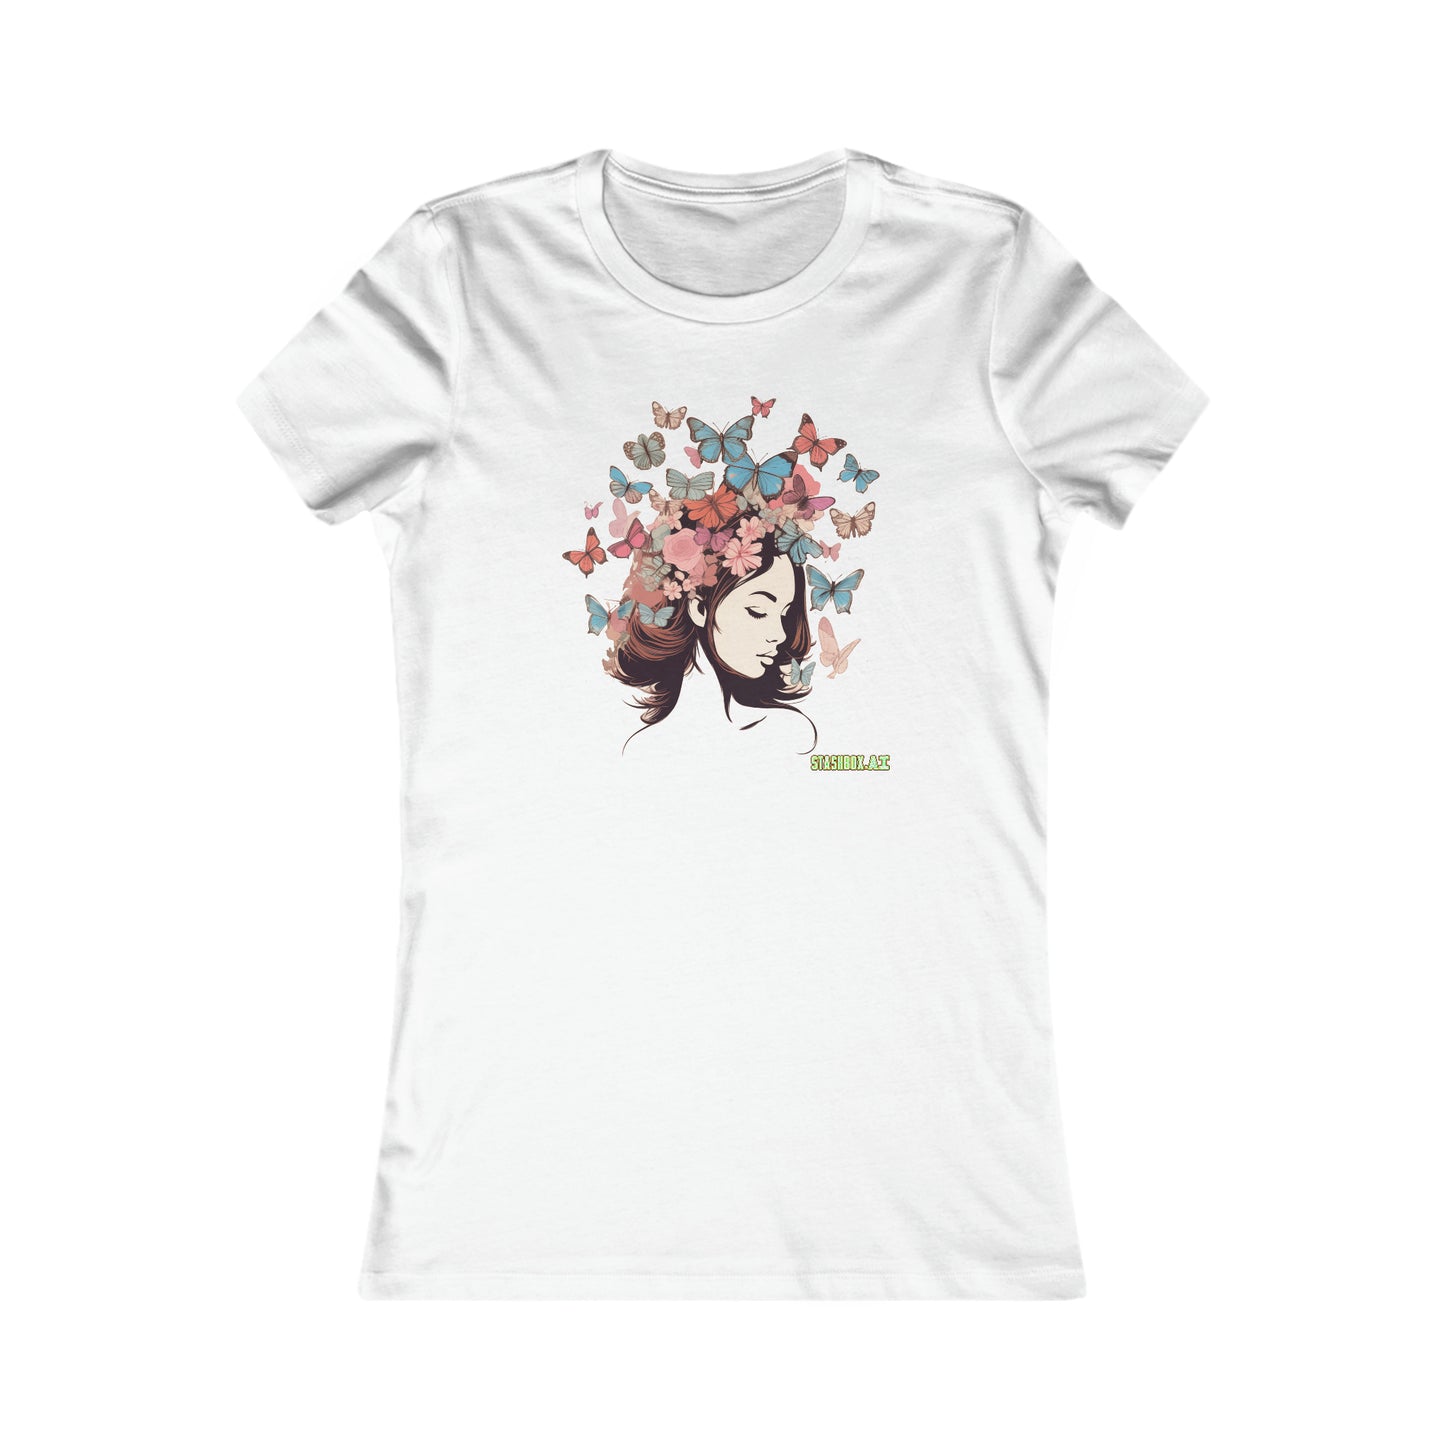 Women's Favorite T-Shirt Beautiful Girl Silouette Butterfly Design 019